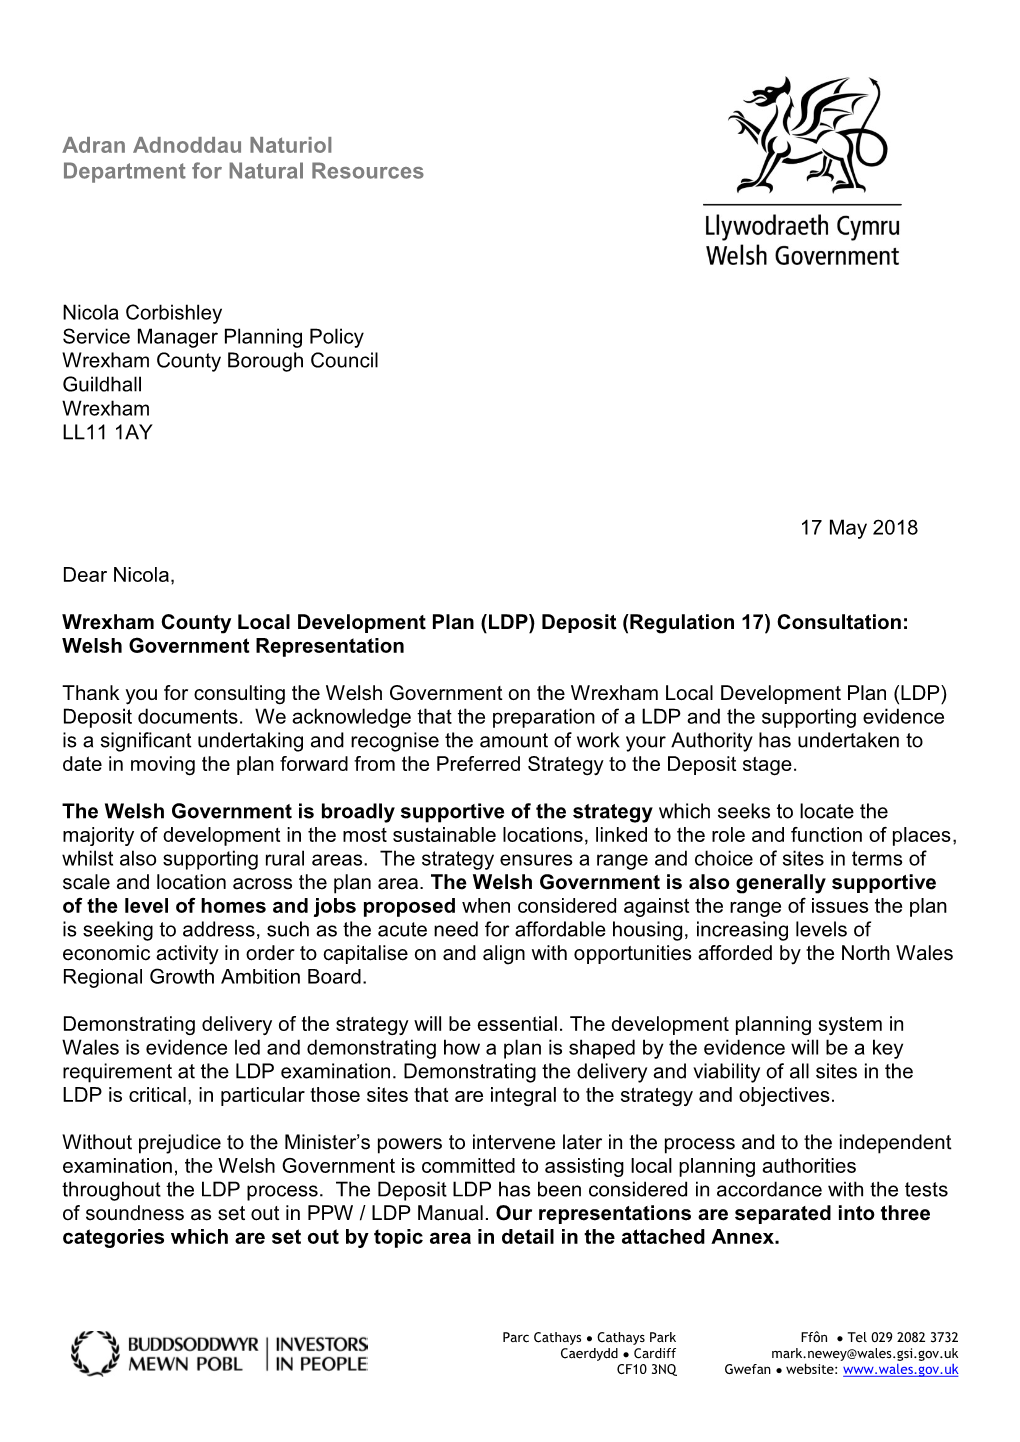 Deposit Regulation 17 Welsh Government Response to Wrexham